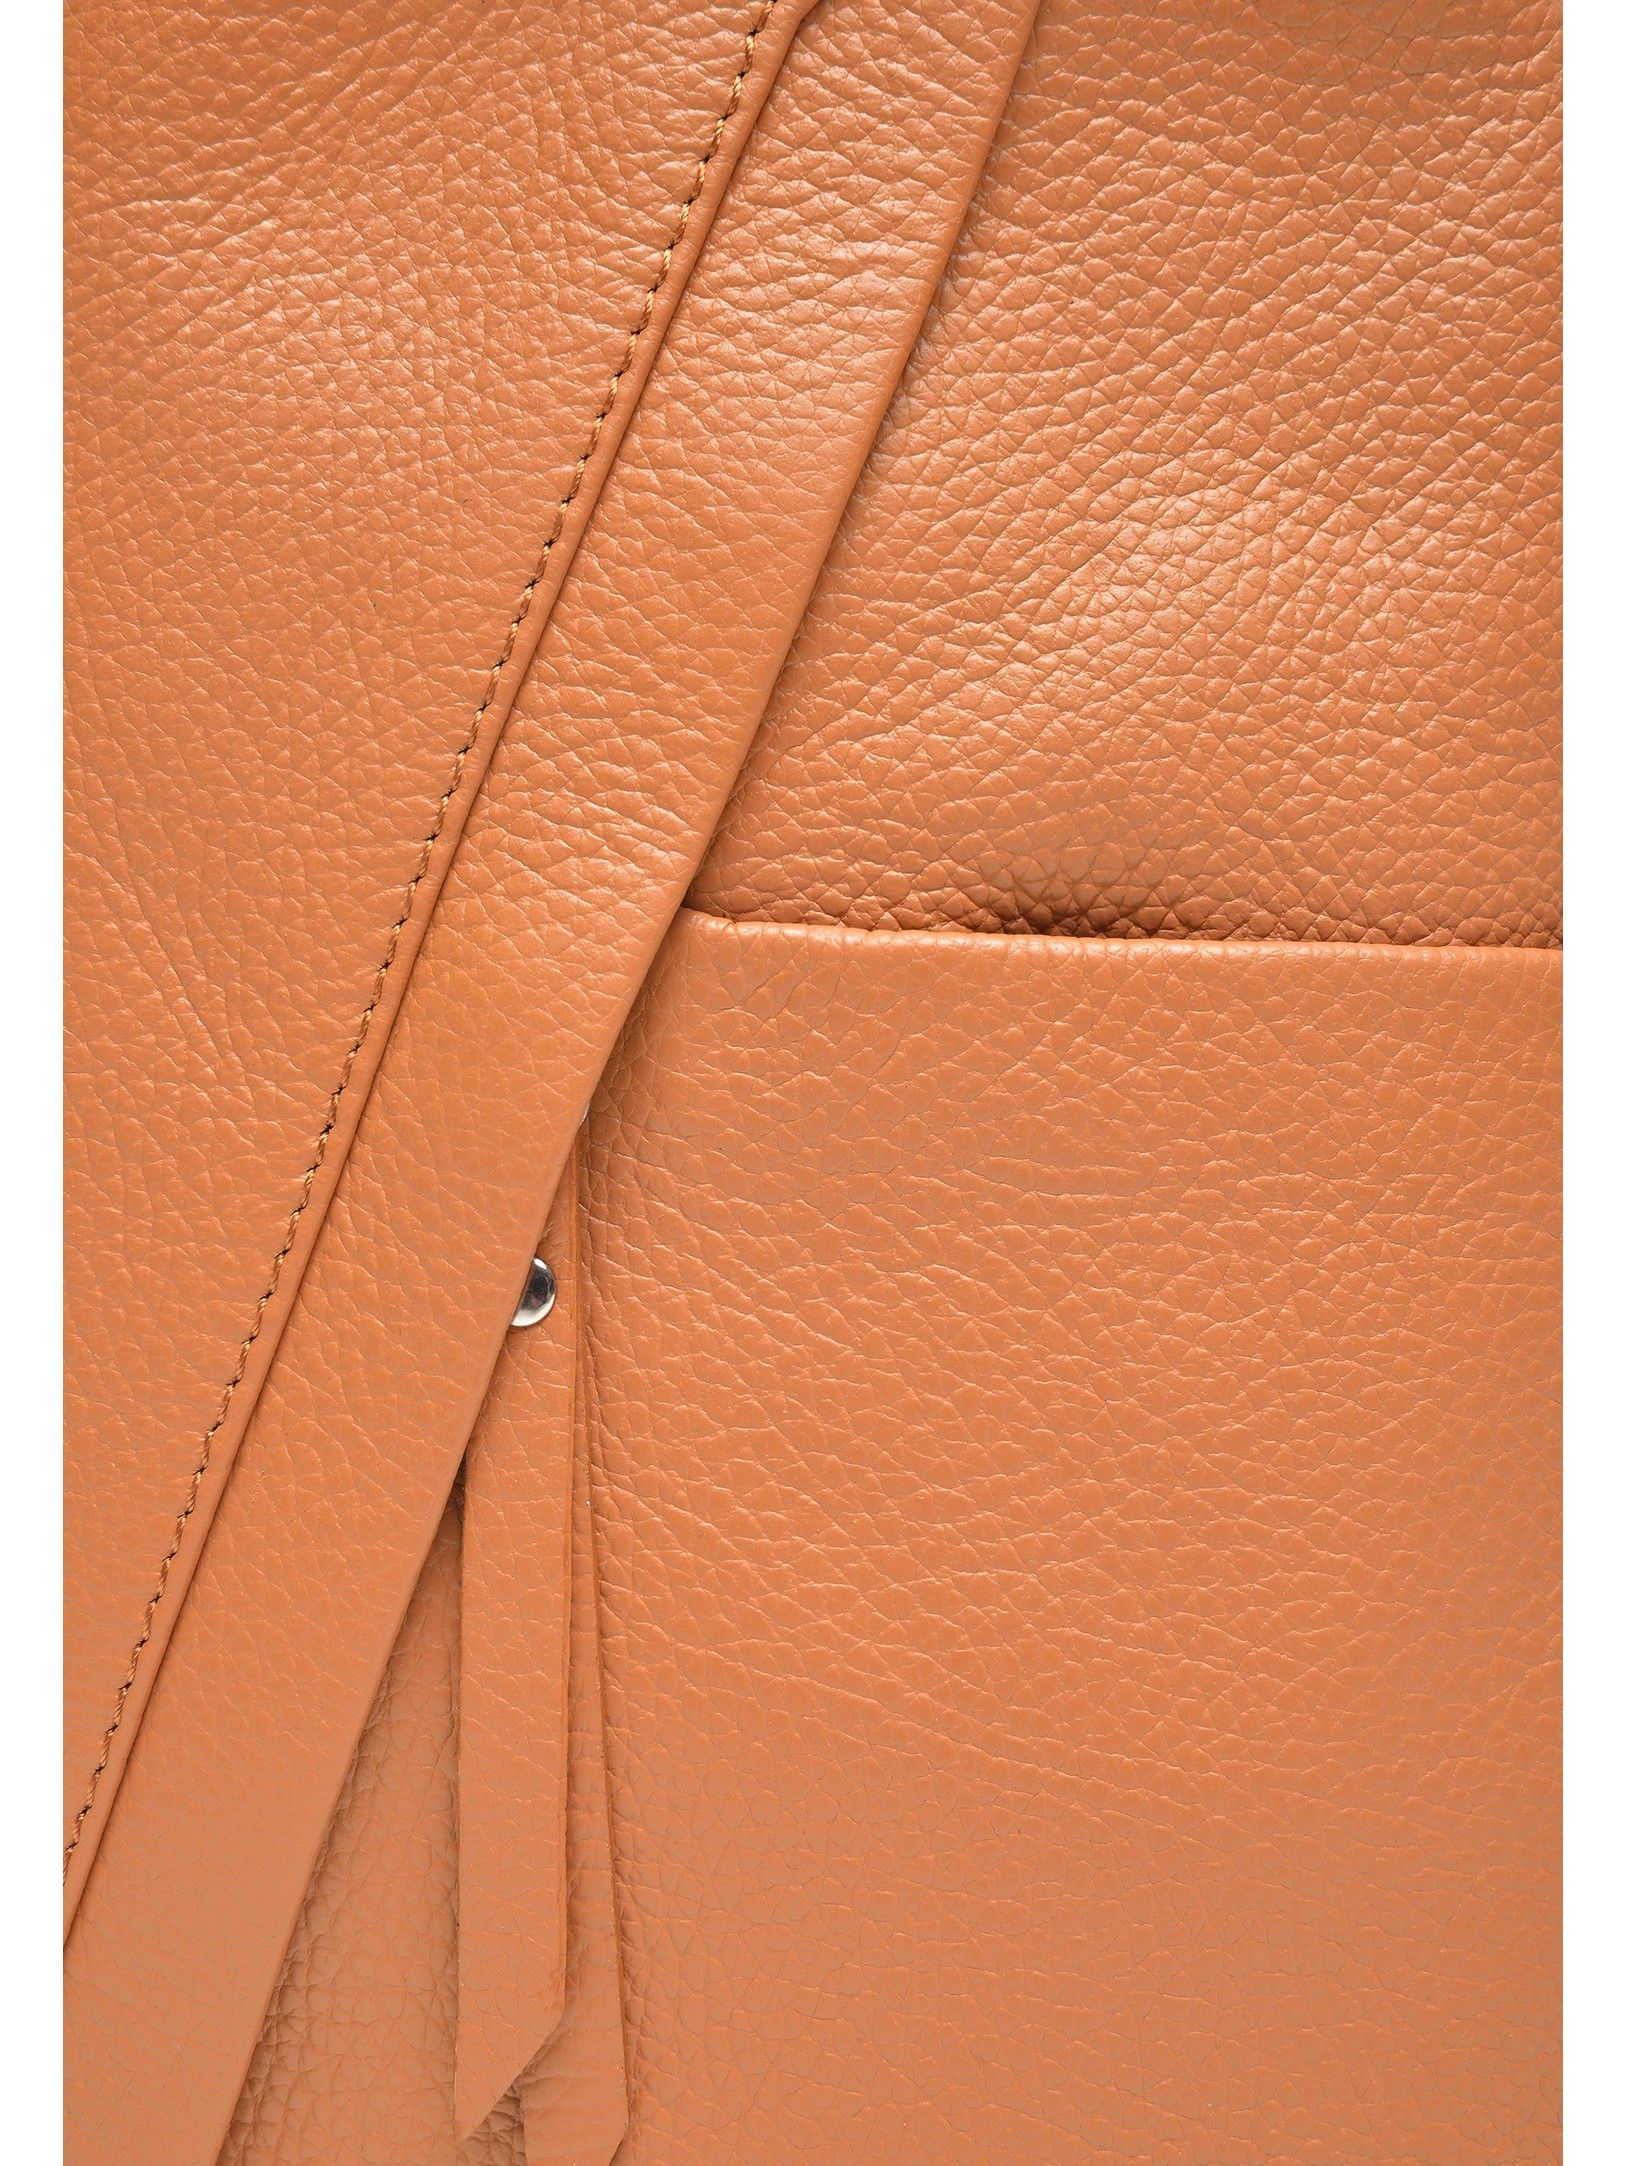 Backpack
100% cow leather
Zip closure
Inner zip pocket
Back zip pocket
Dimensions (L): 22x42x14 cm
Handle: 20 cm non adjustable
Shoulder strap: 2x80 cm adjustable